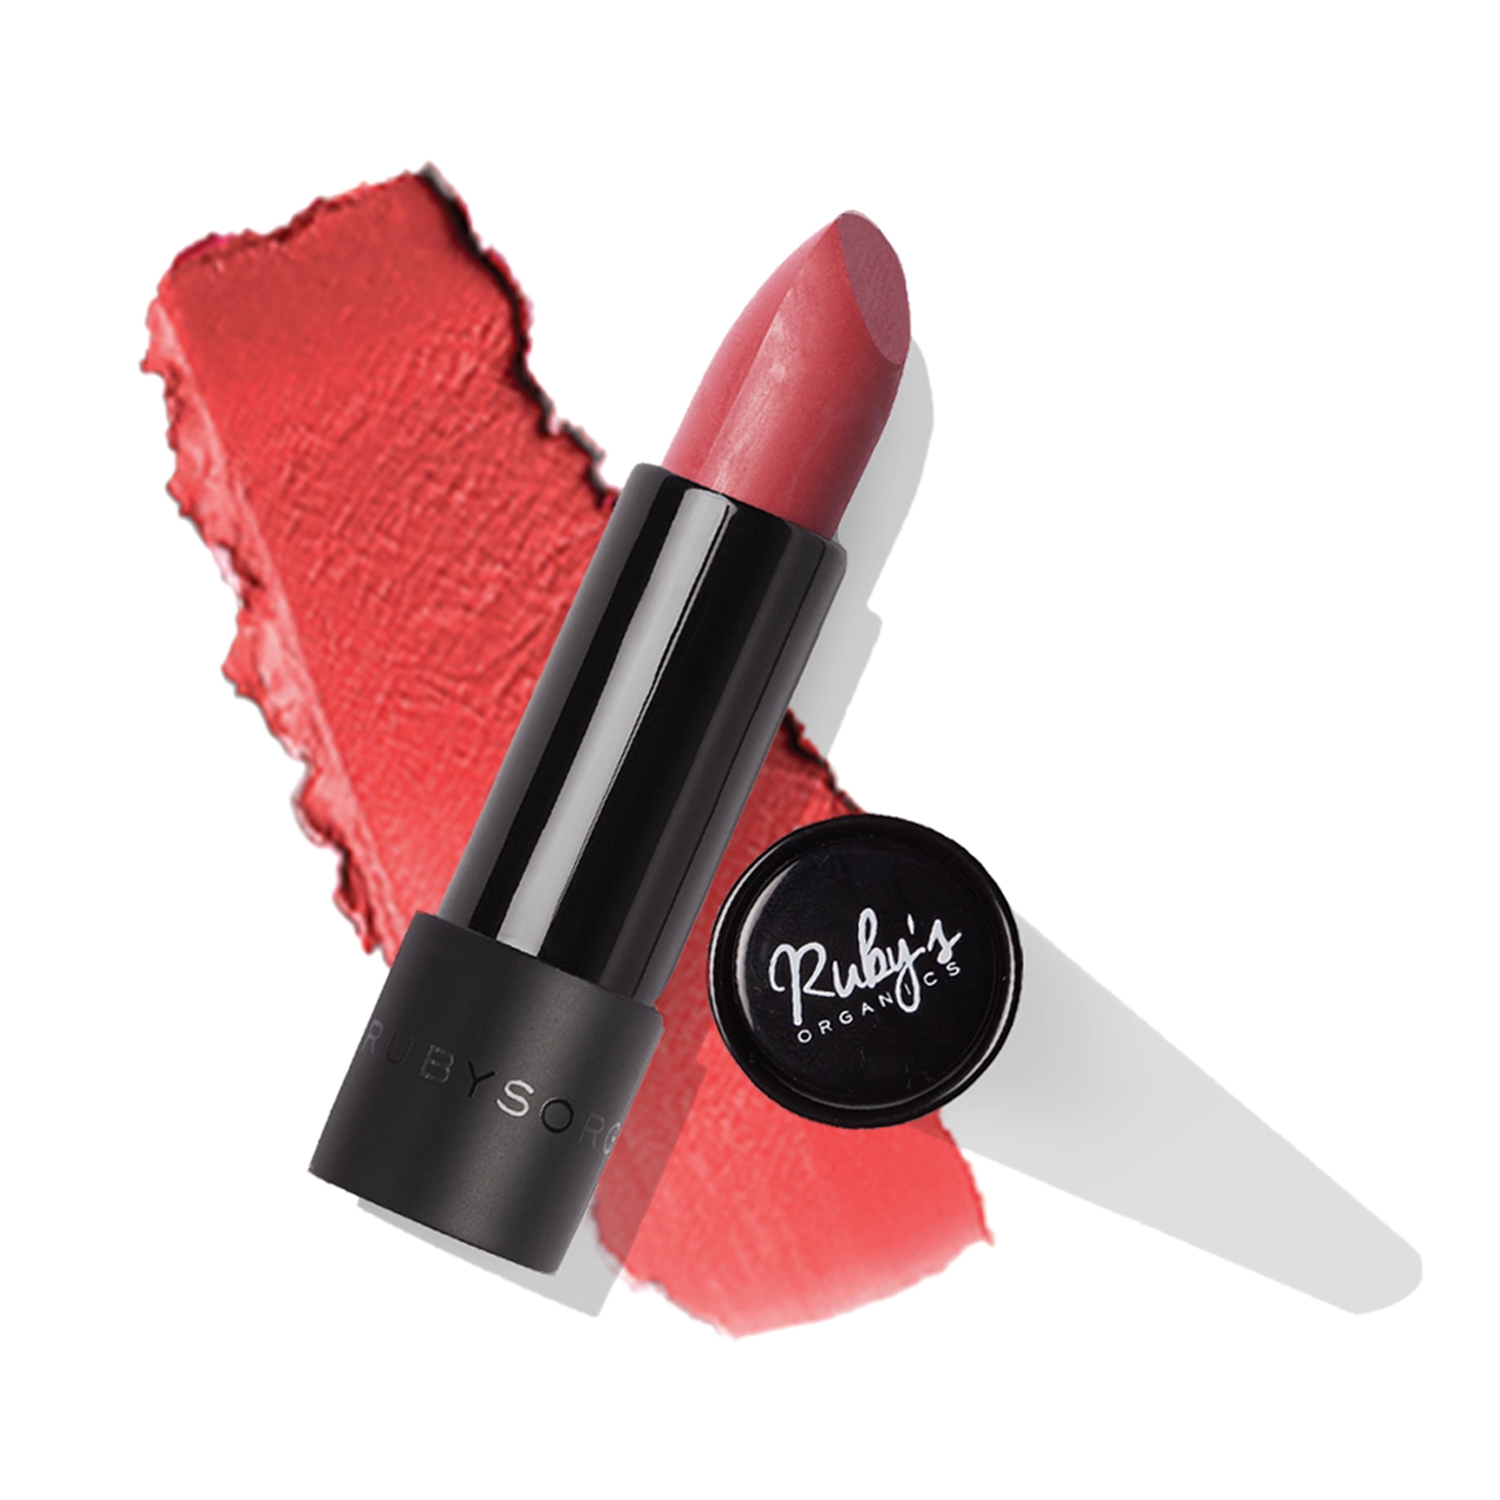 Ruby's Organics | Ruby's Organics Lipstick - Apricot (3.7g)